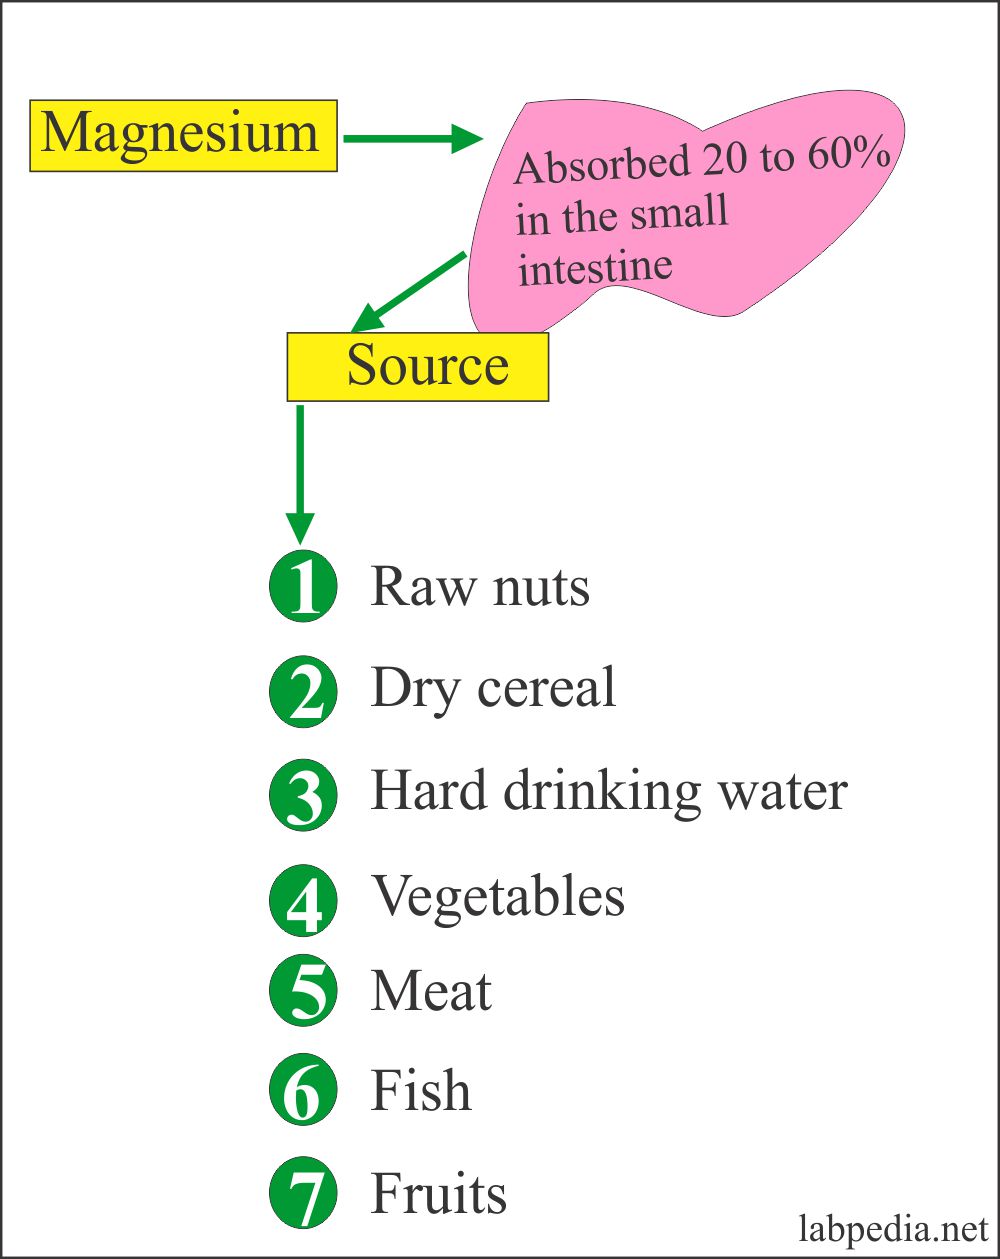 Sources of Magnesium